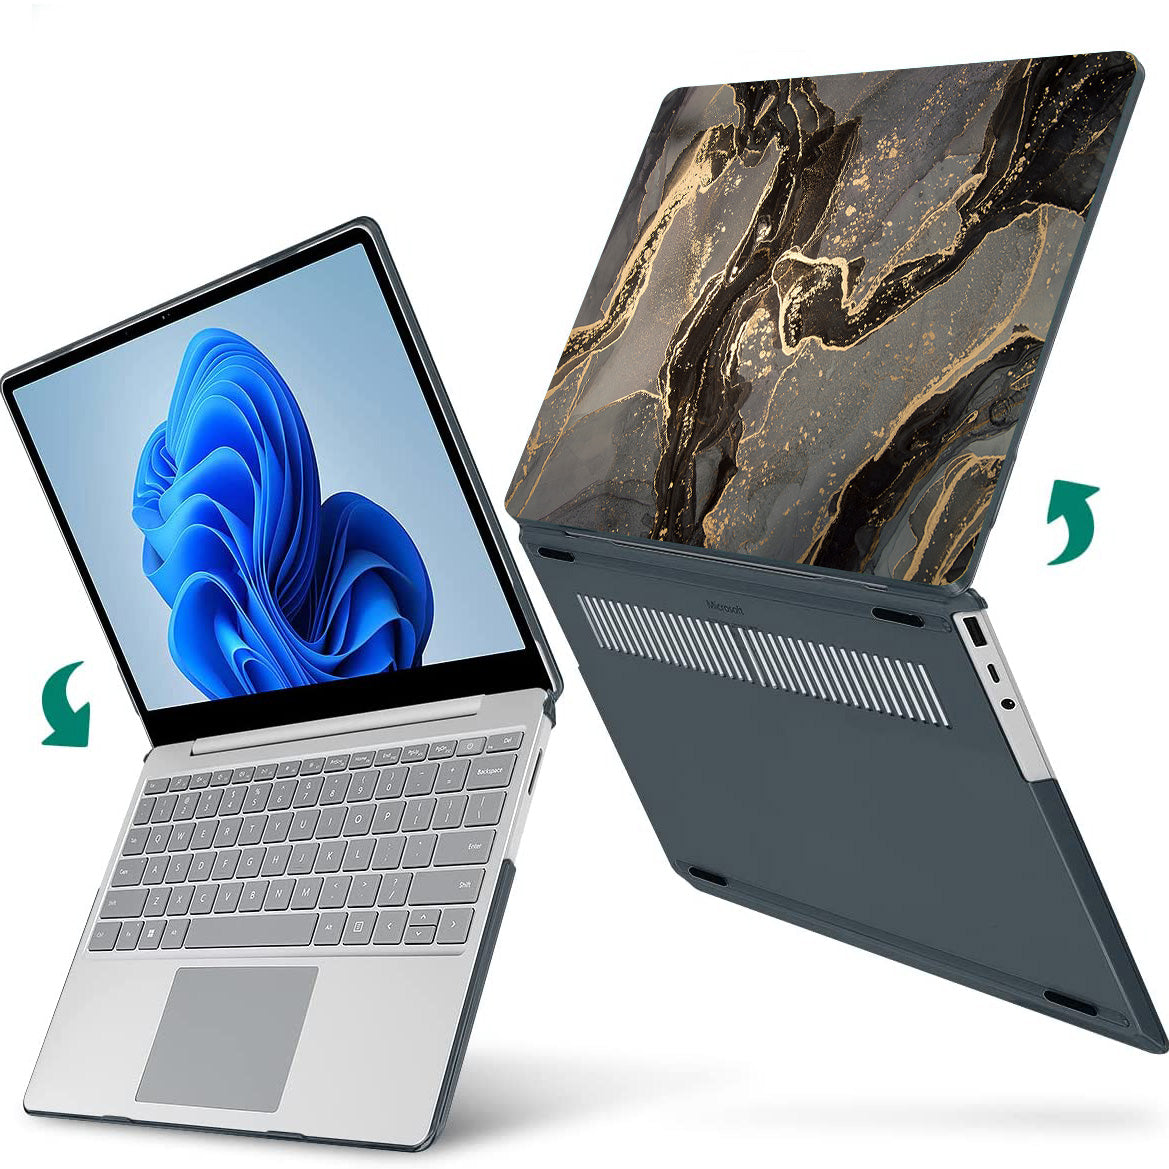 Persist Microsoft Surface Laptop Case